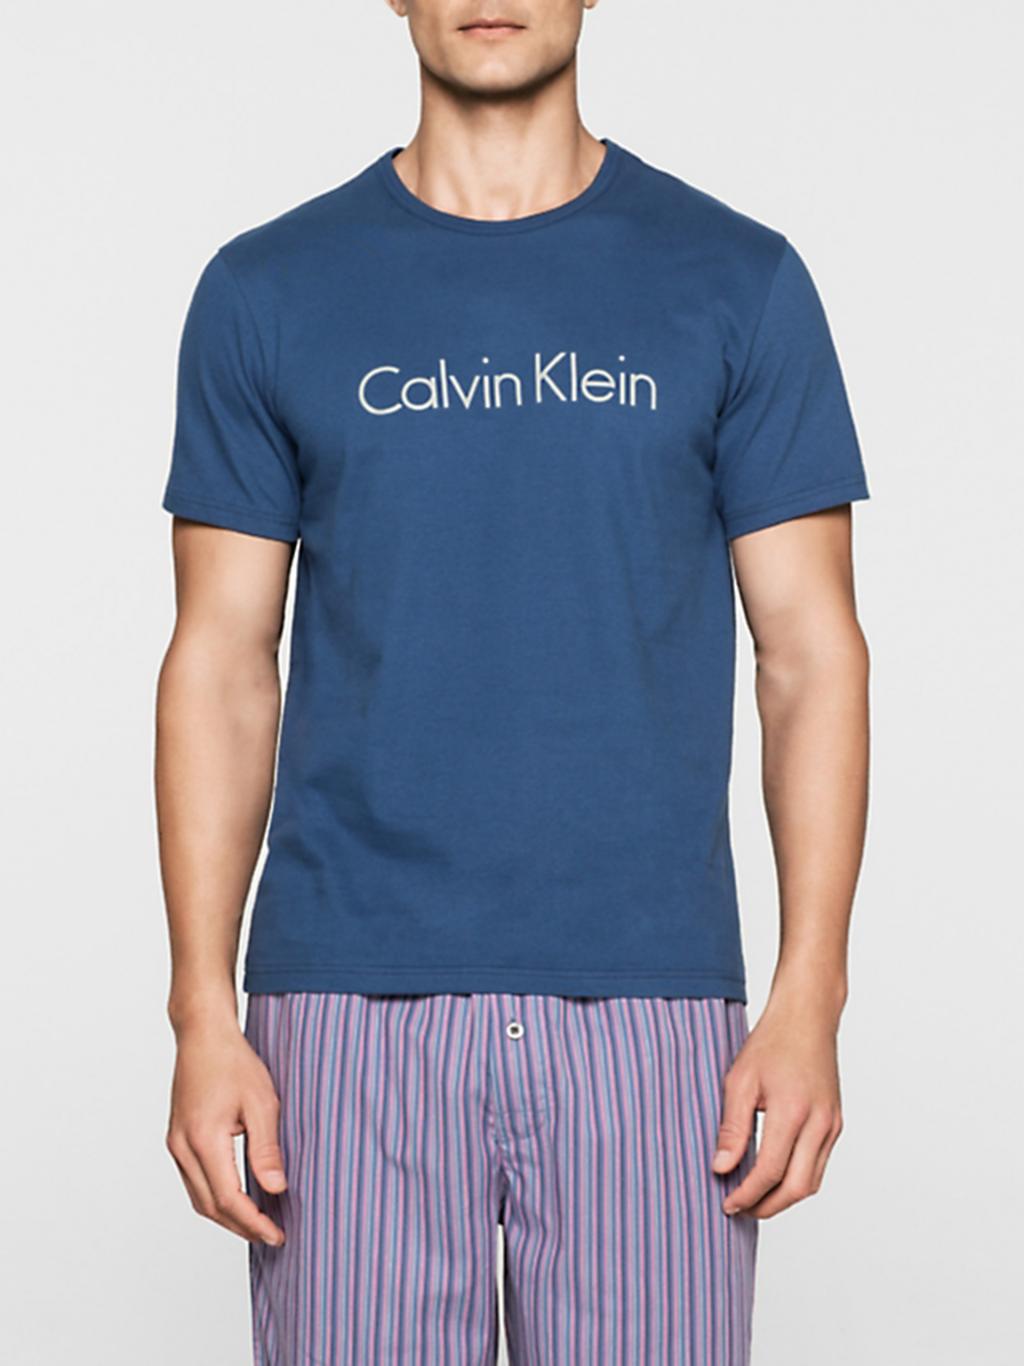 NM1129 - pánské triko Calvin Klein